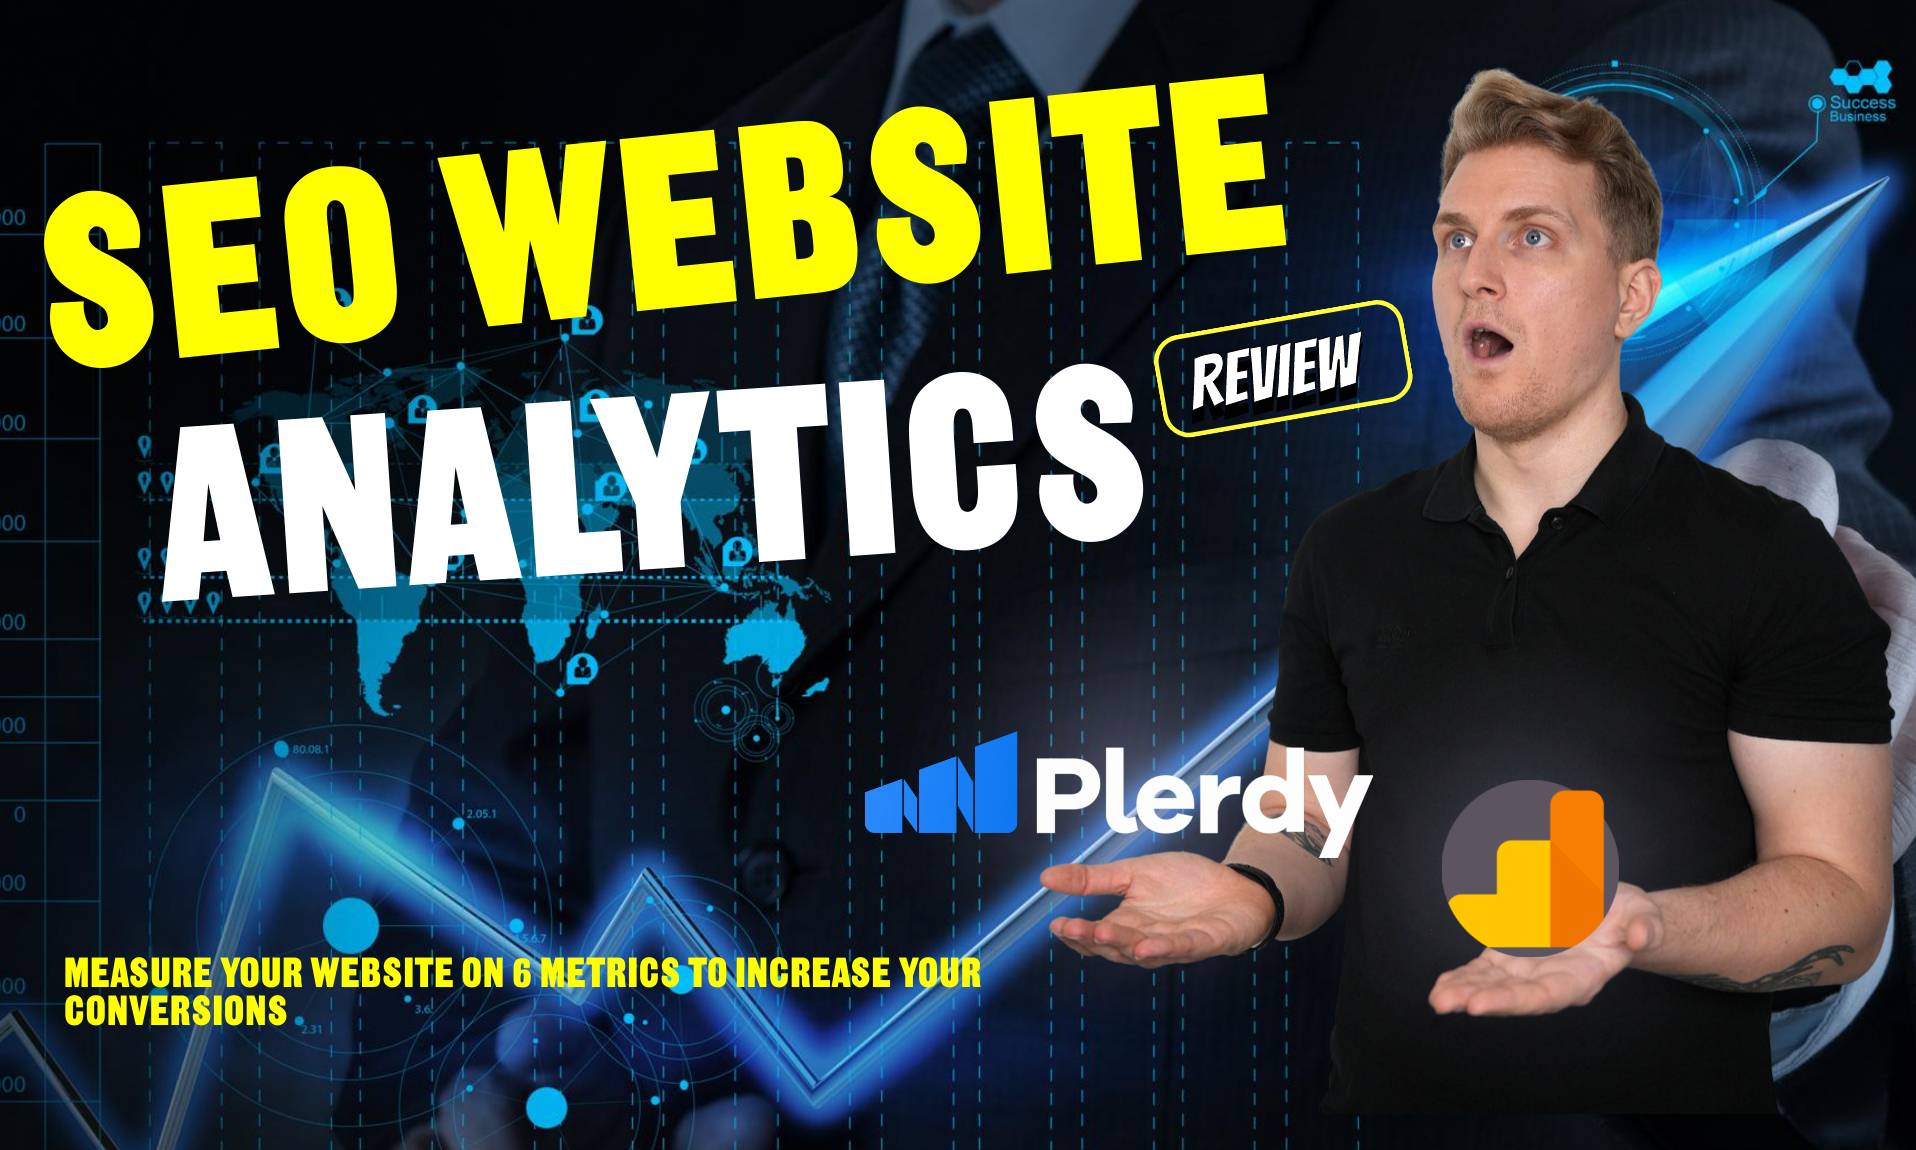 Plerdy - Measure your website performance